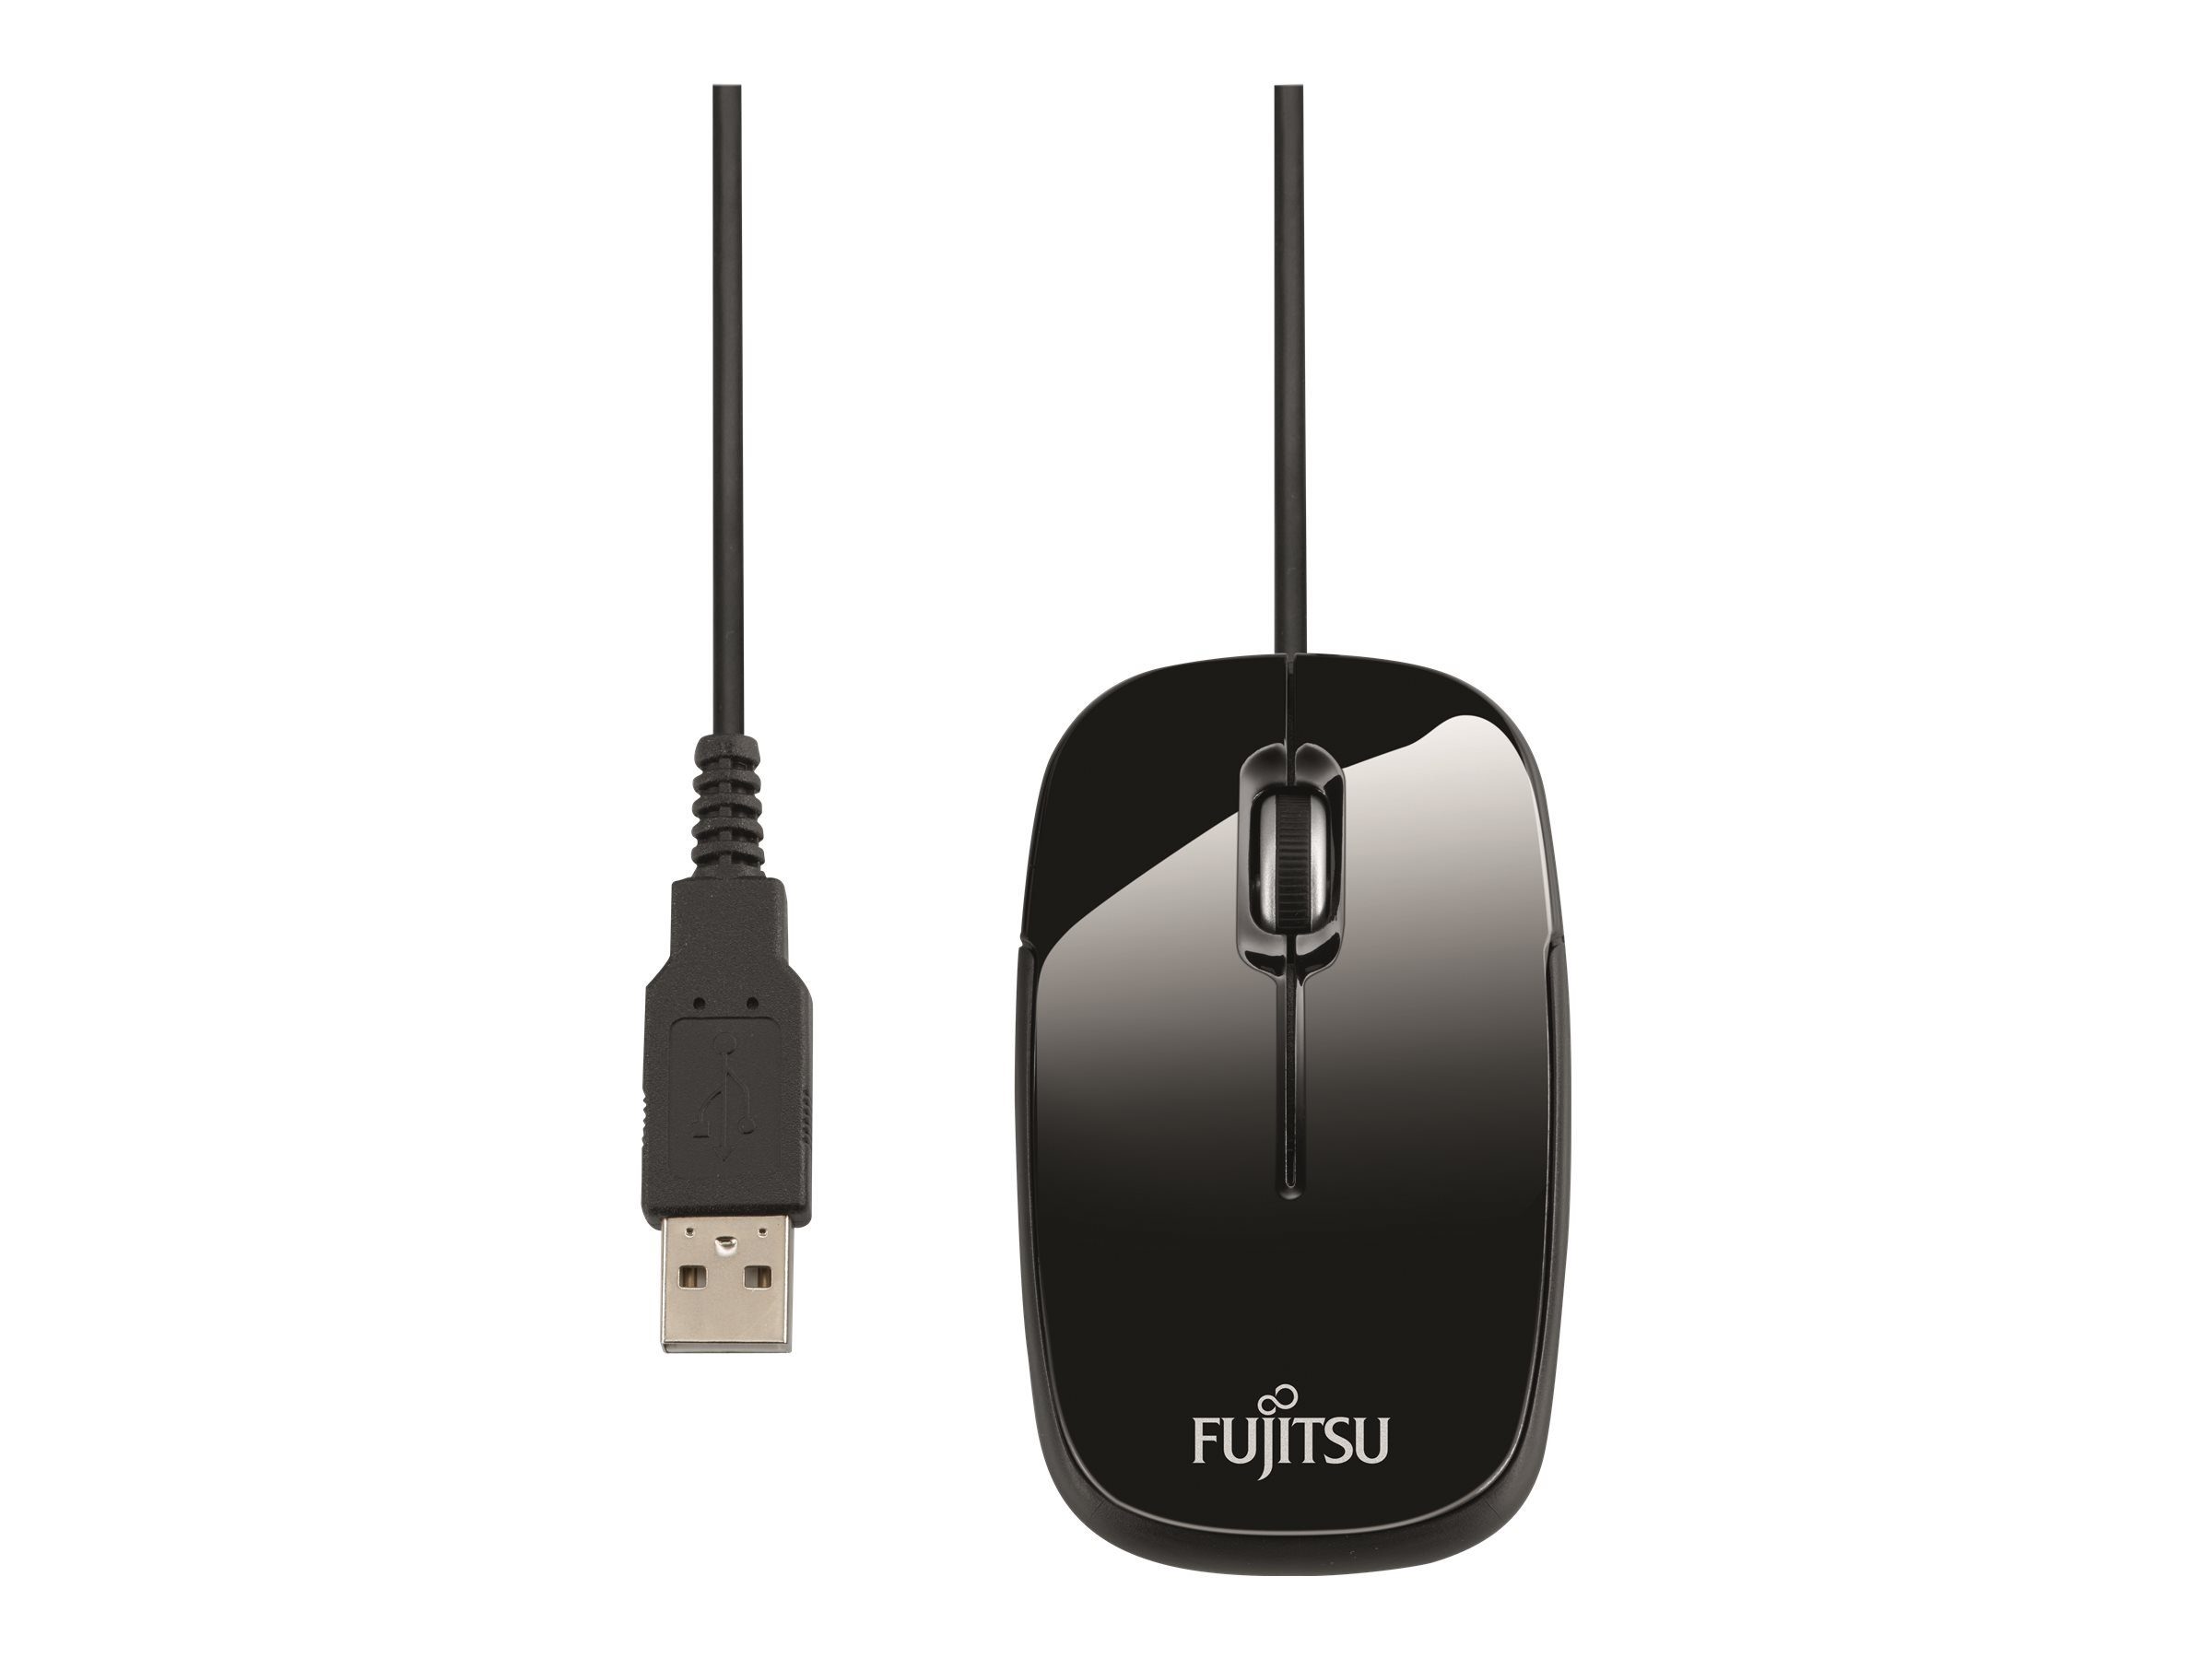 Fujitsu FUJITSU Mouse M420 NB Maus